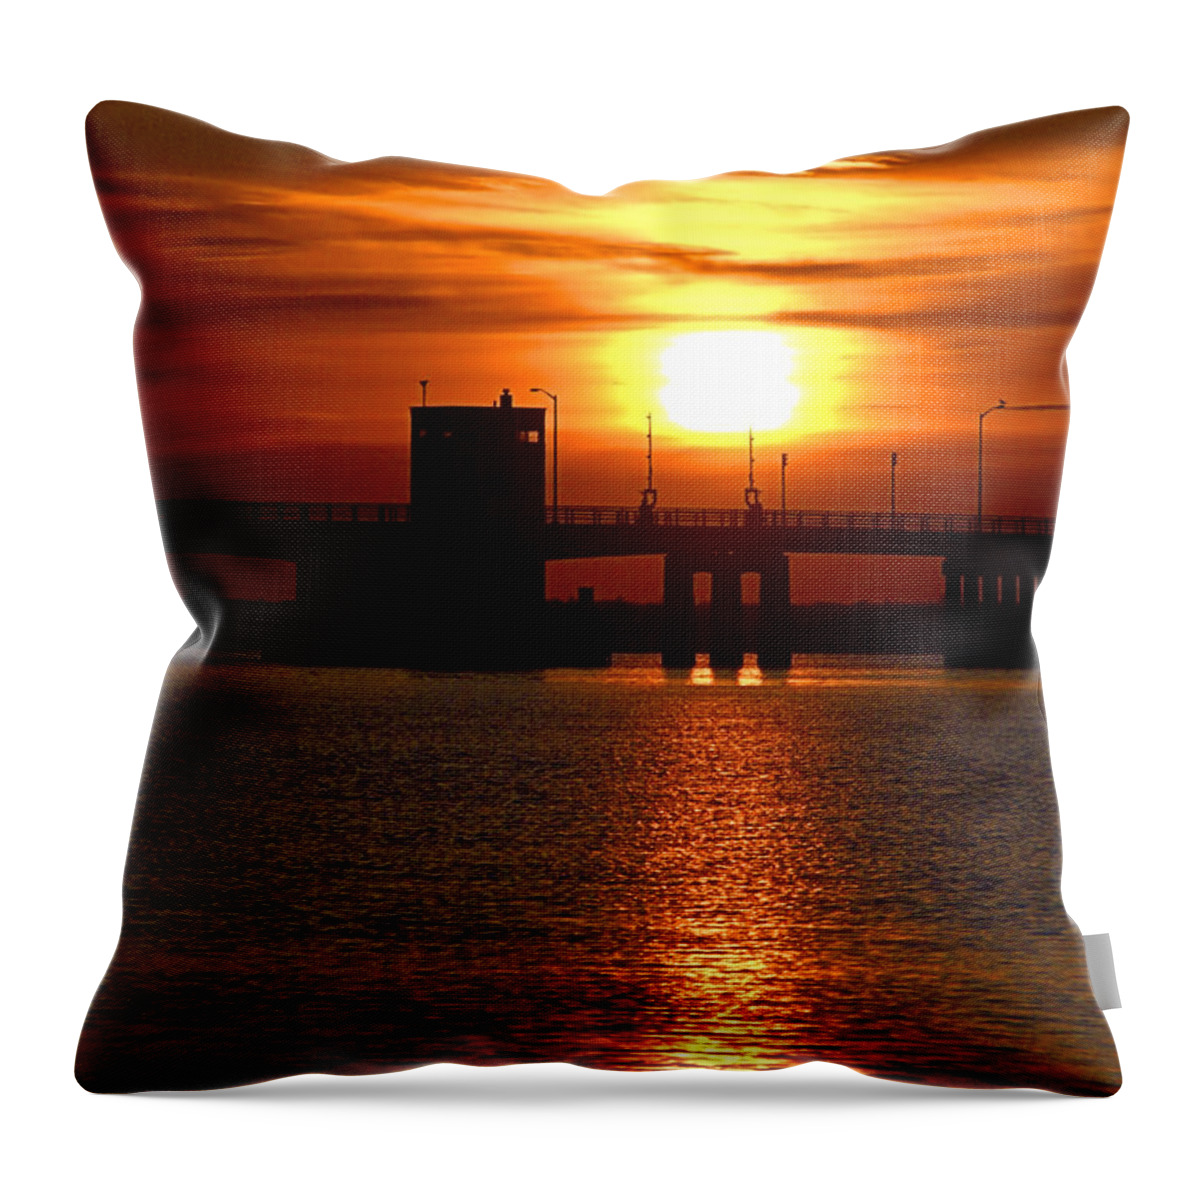 Bridge Throw Pillow featuring the photograph Sunset Bridge by Newwwman